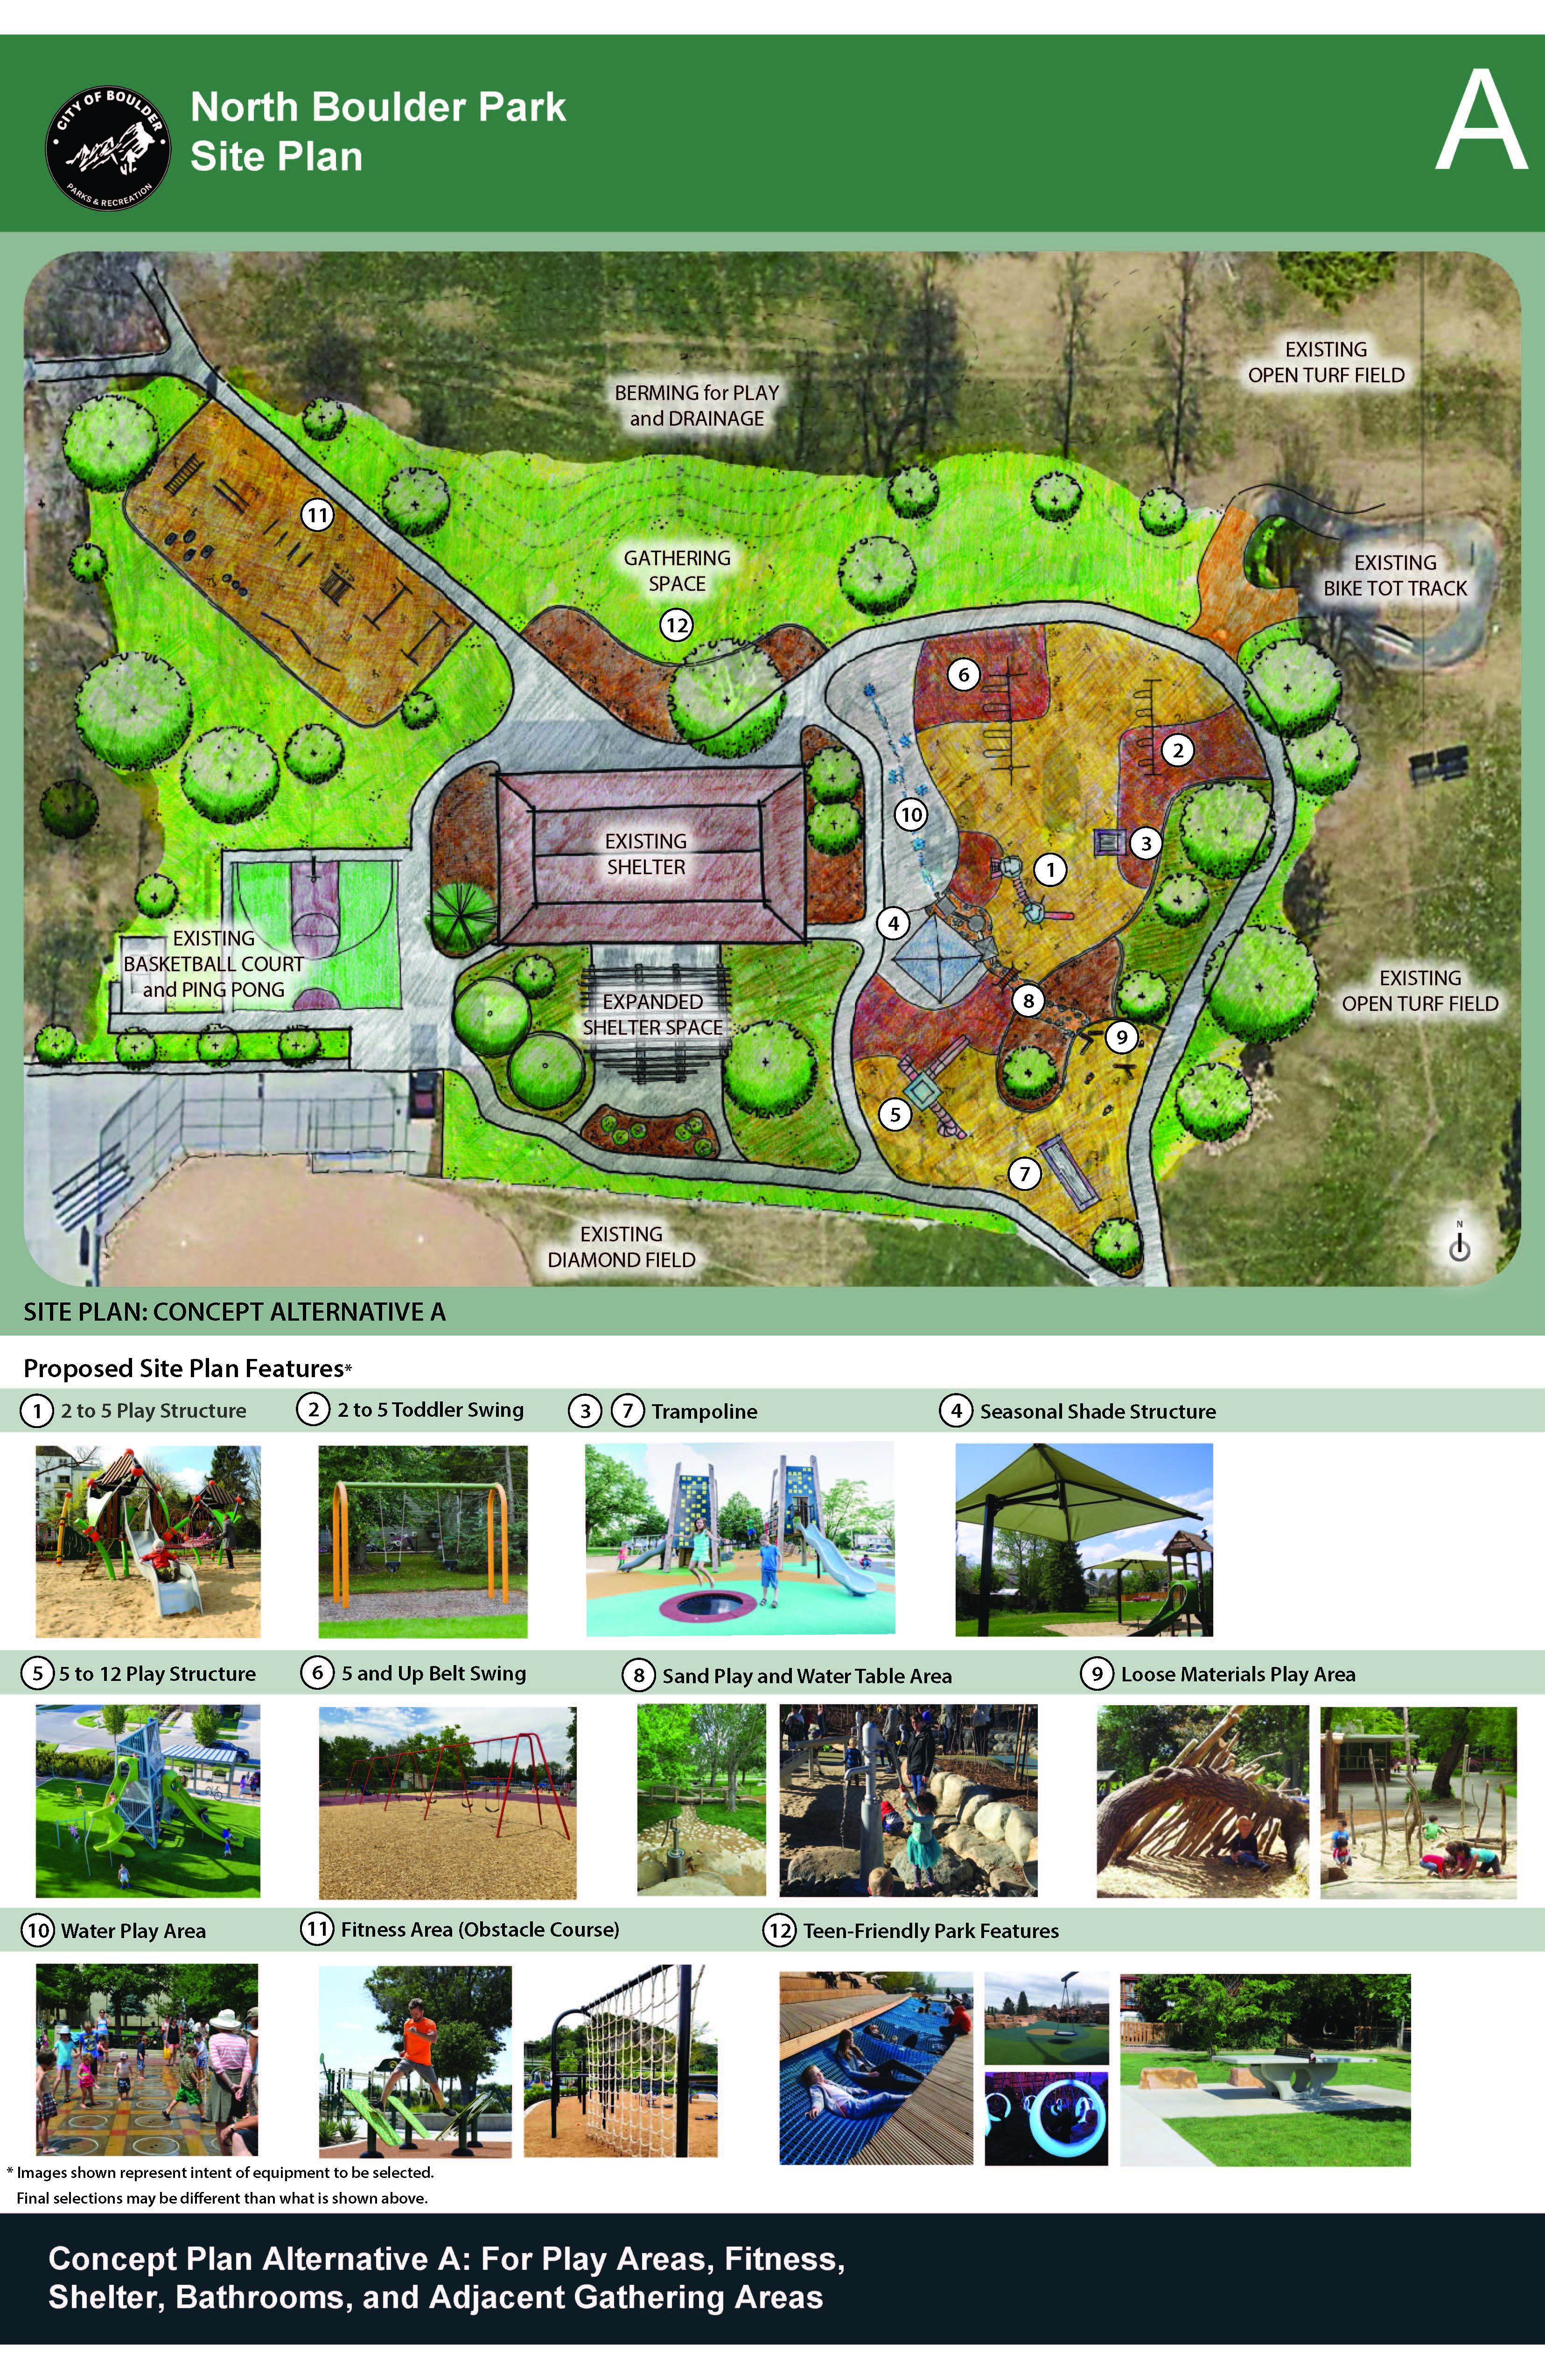 North Boulder Park Renovation Concept Plan Alternative A. Longer description included below.